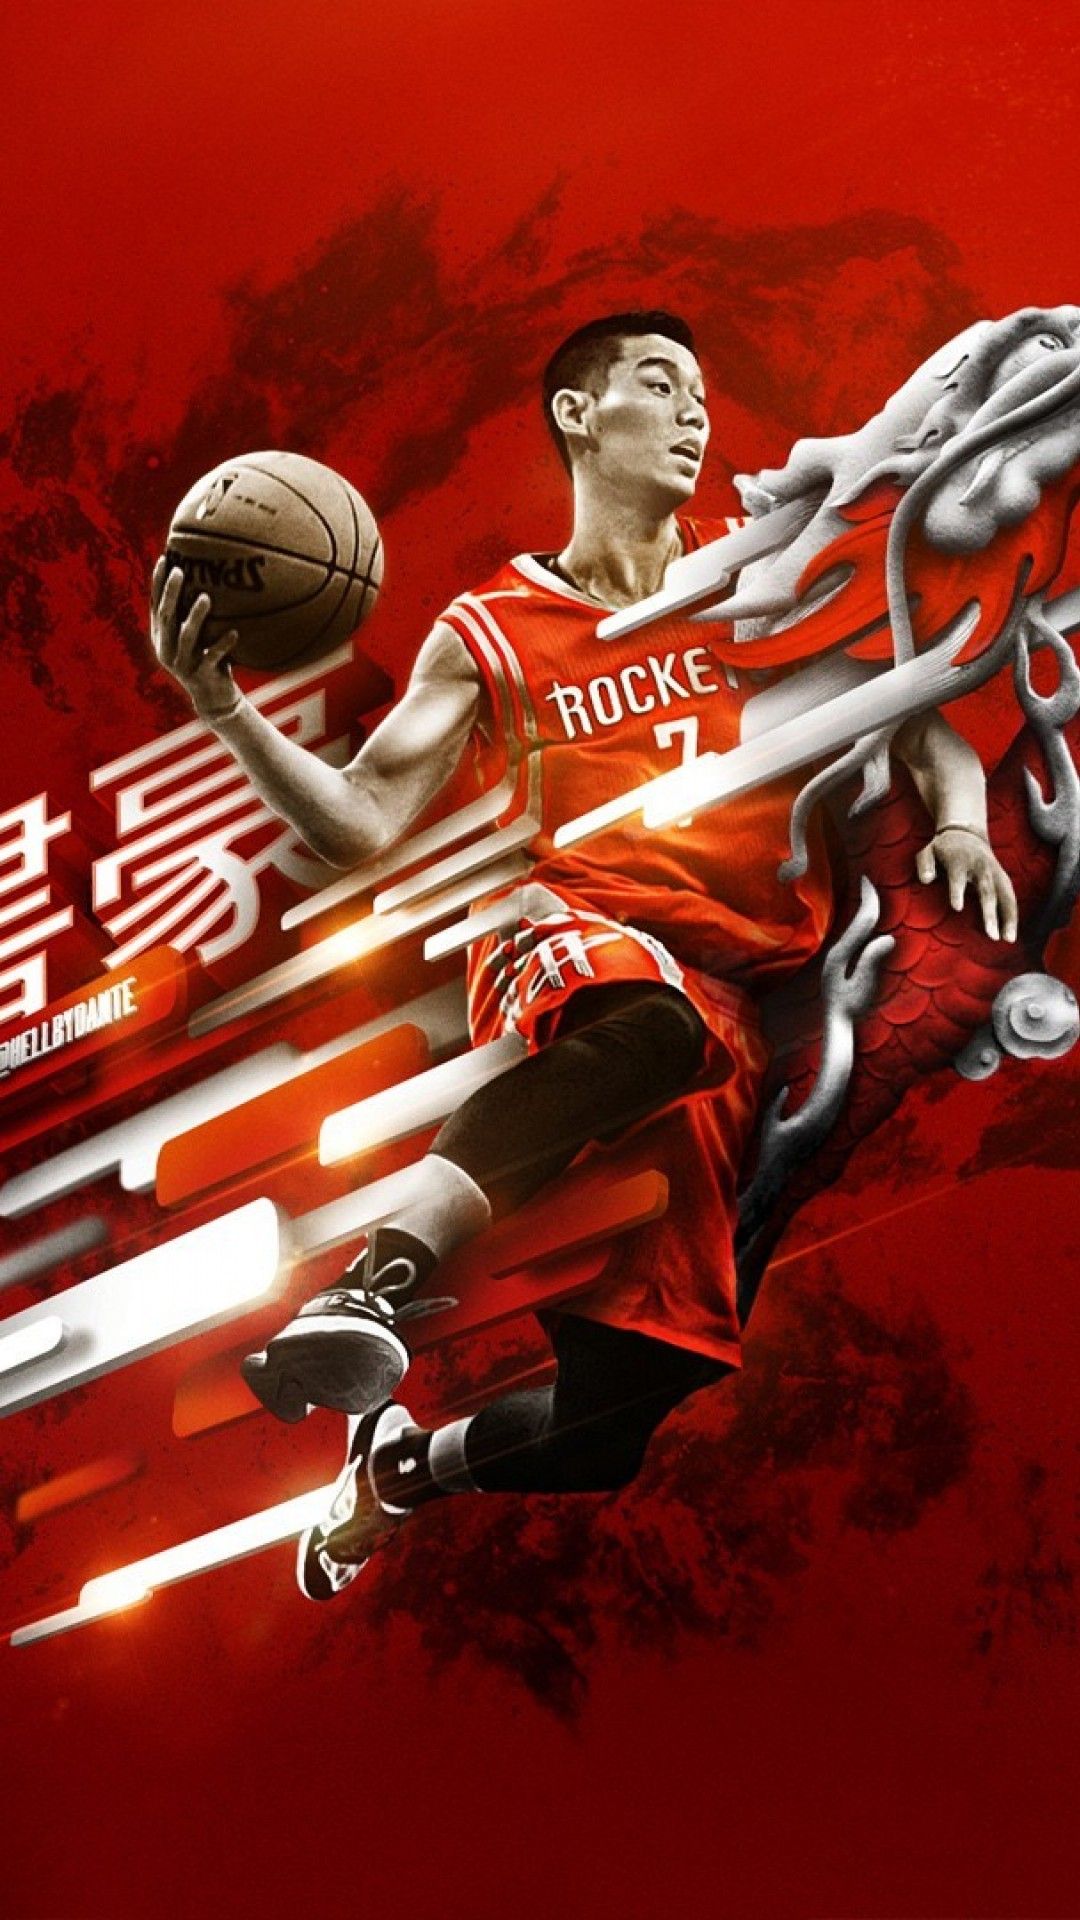 Basketball Player Wallpapers